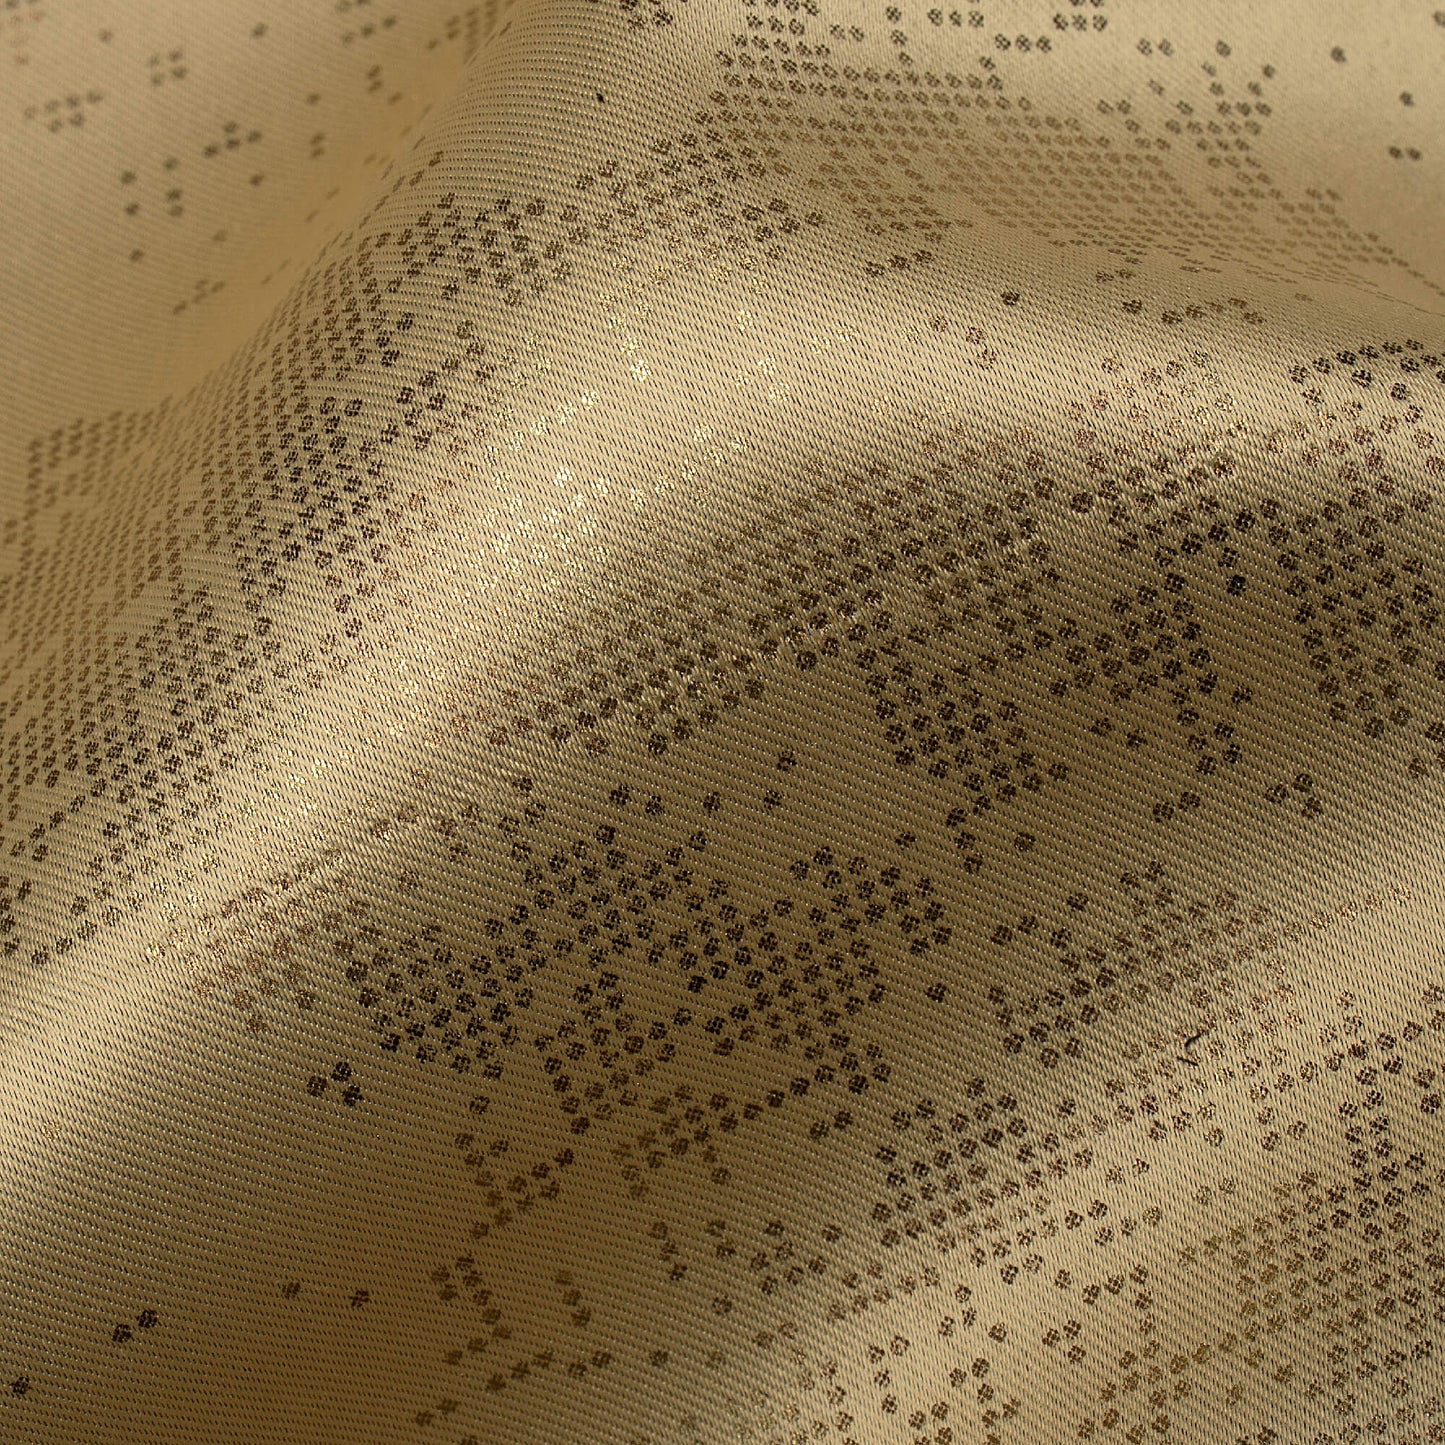 Granola Golden Dots Geometric Pattern Premium Curtain Fabric (Width 54 Inches)